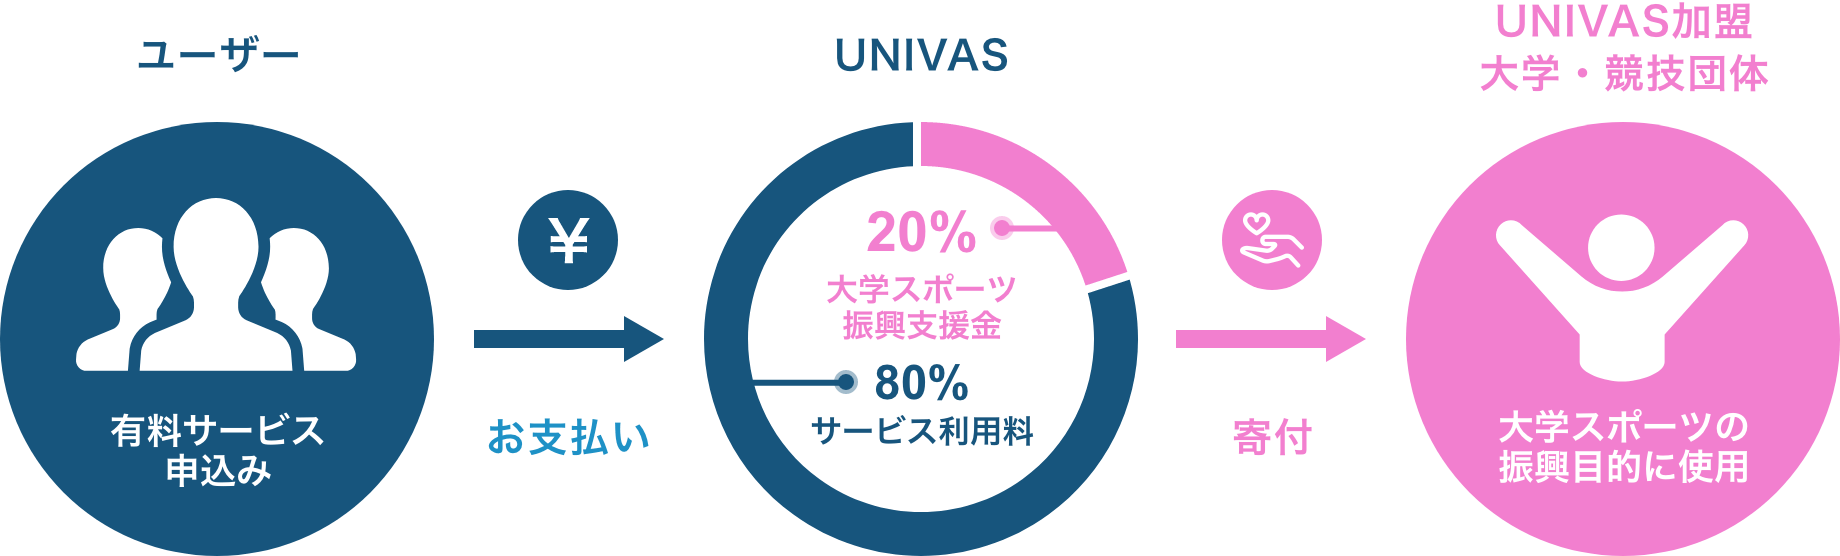 UNIVAS Plus